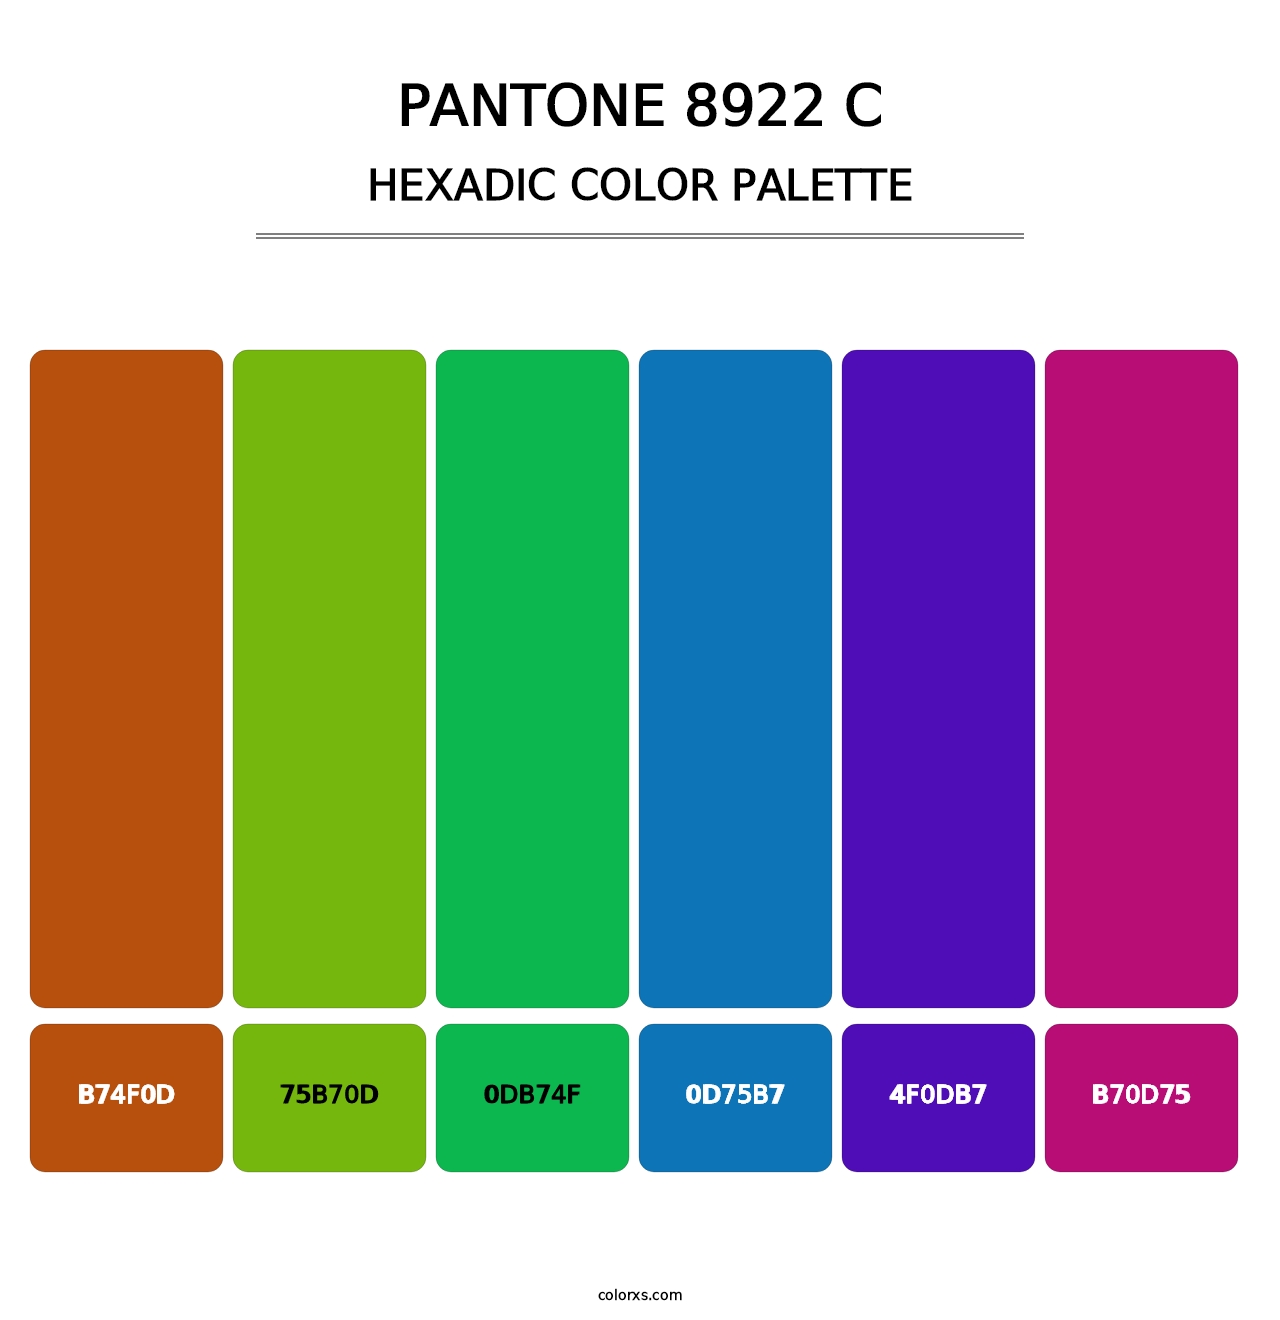 PANTONE 8922 C - Hexadic Color Palette